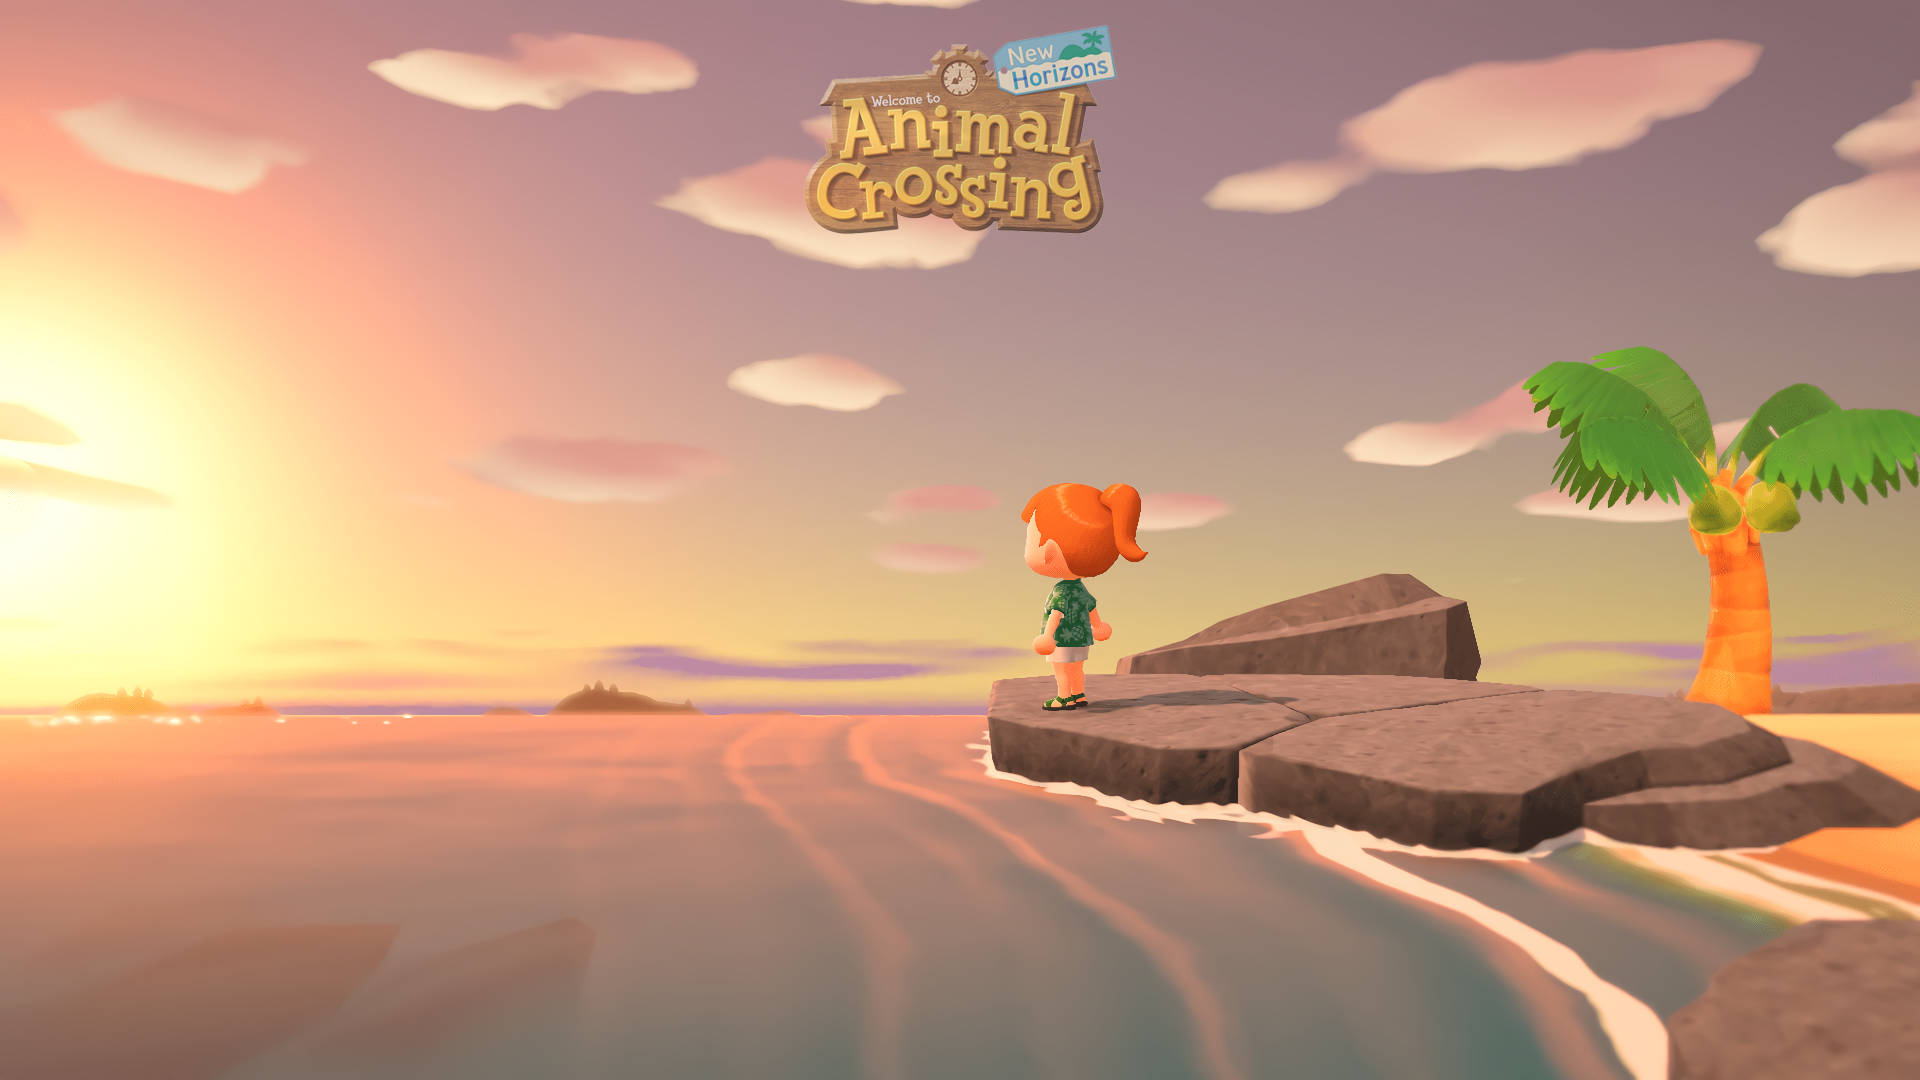 Hd Beautiful Sunset And Island Animal Crossing